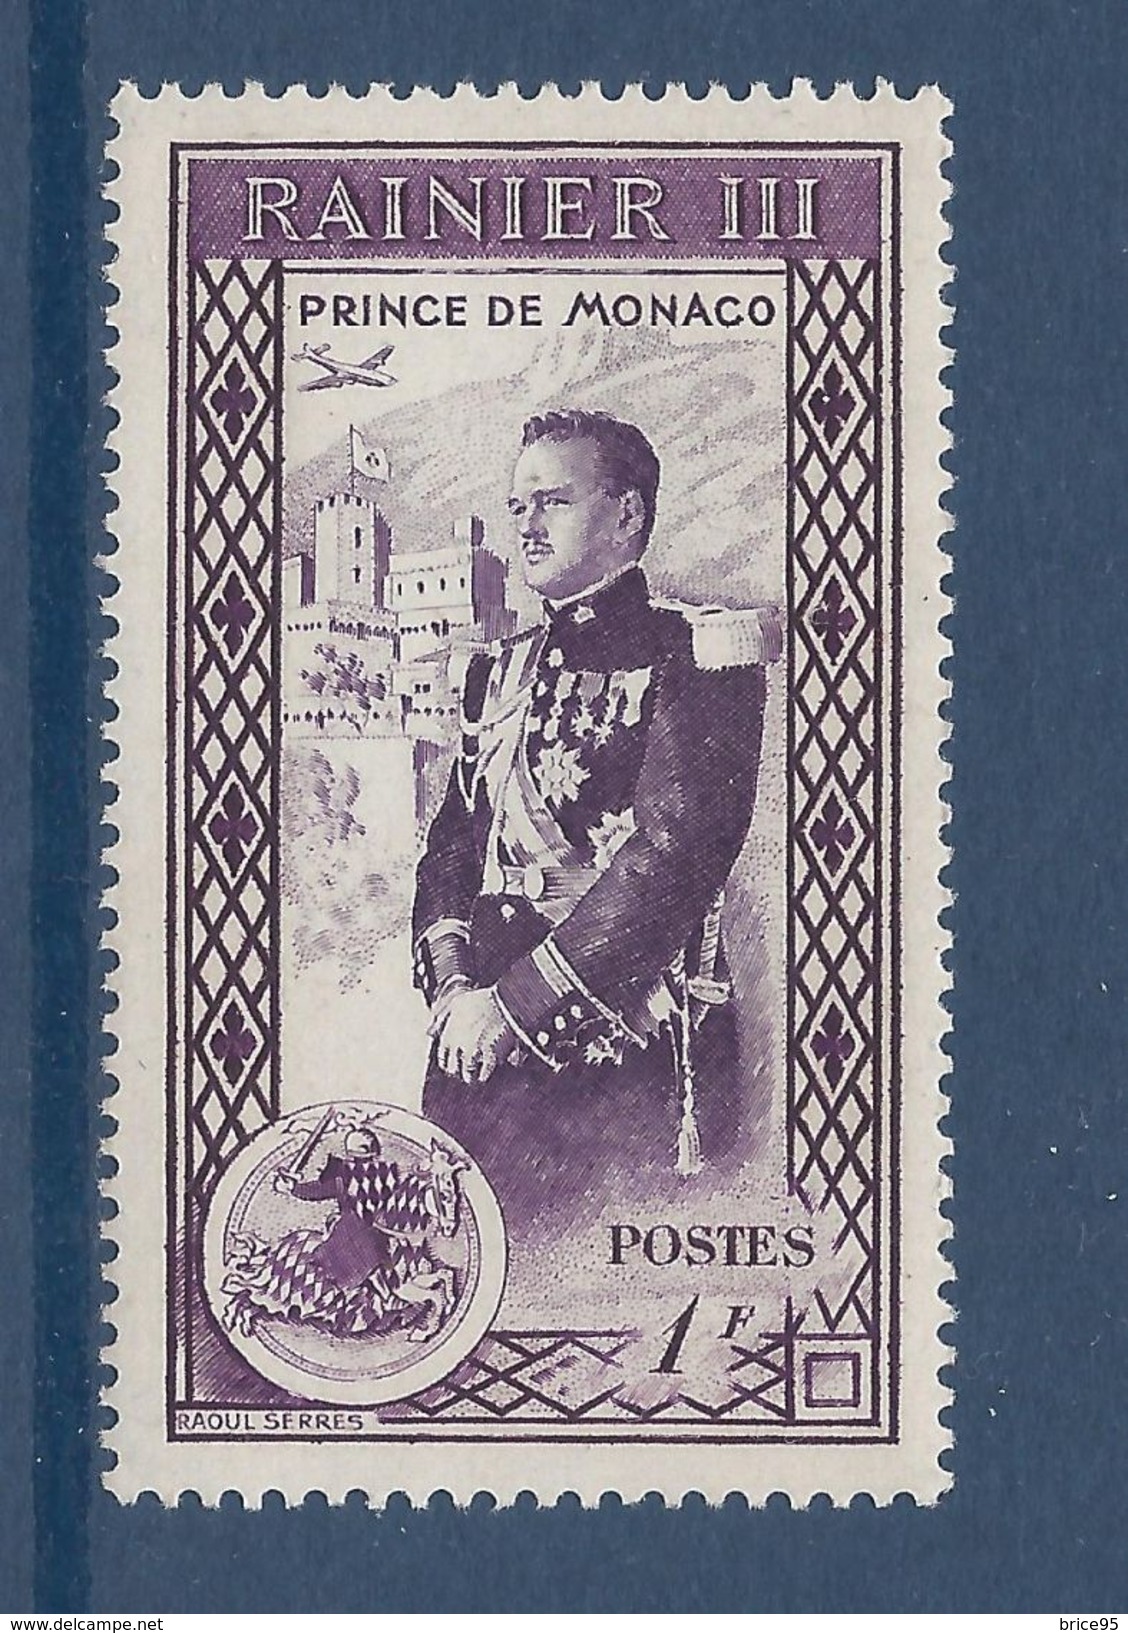 Monaco - YT N° 340 - Neuf Sans Charnière - 1950 - Ungebraucht